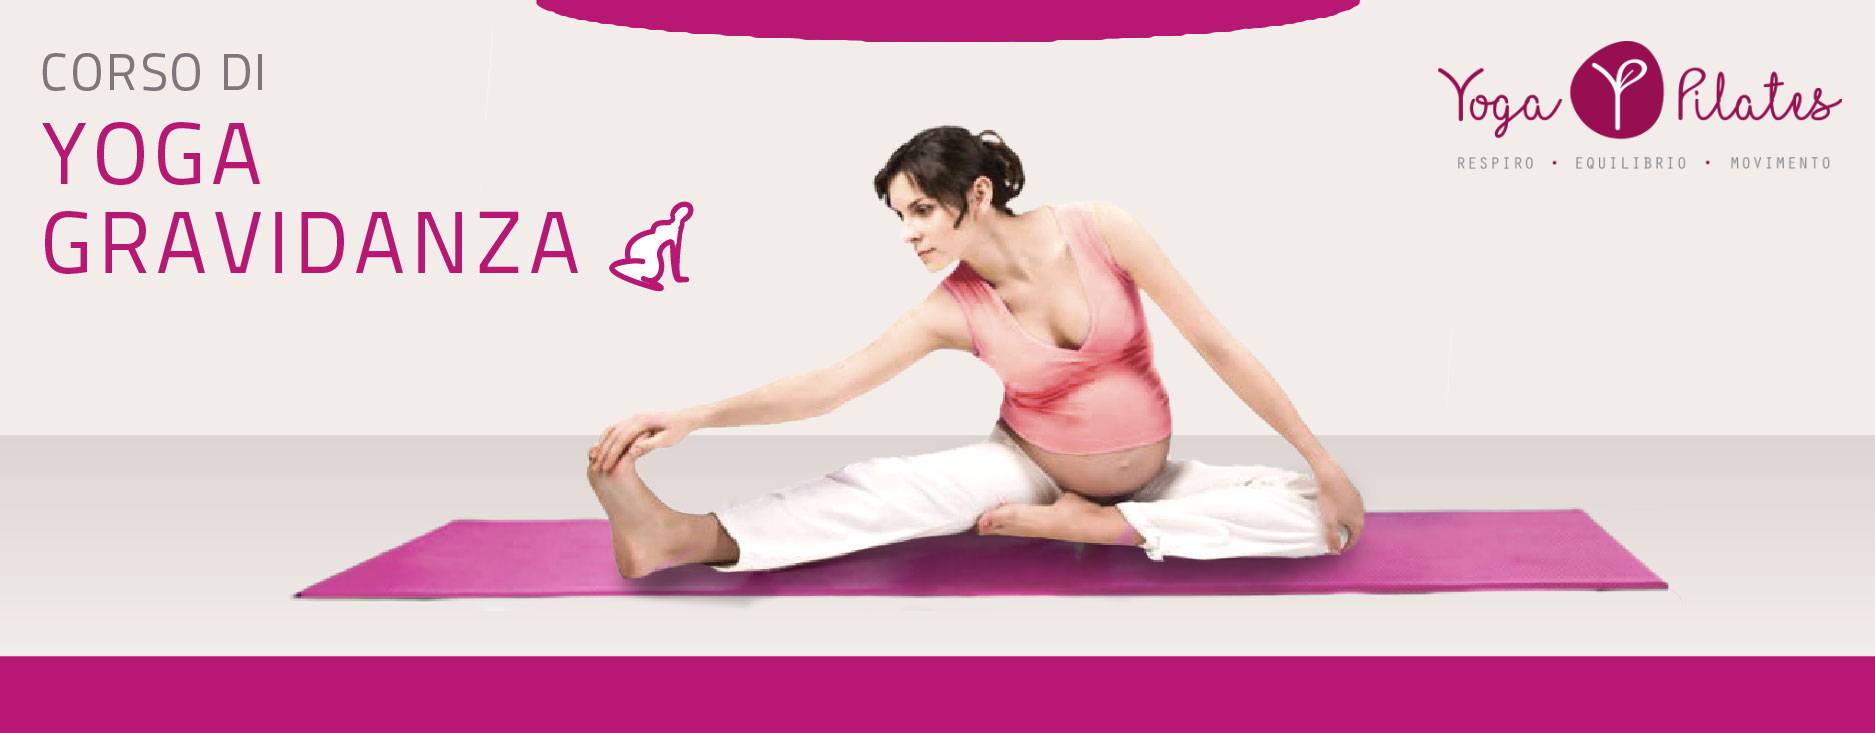 yoga gravidanza